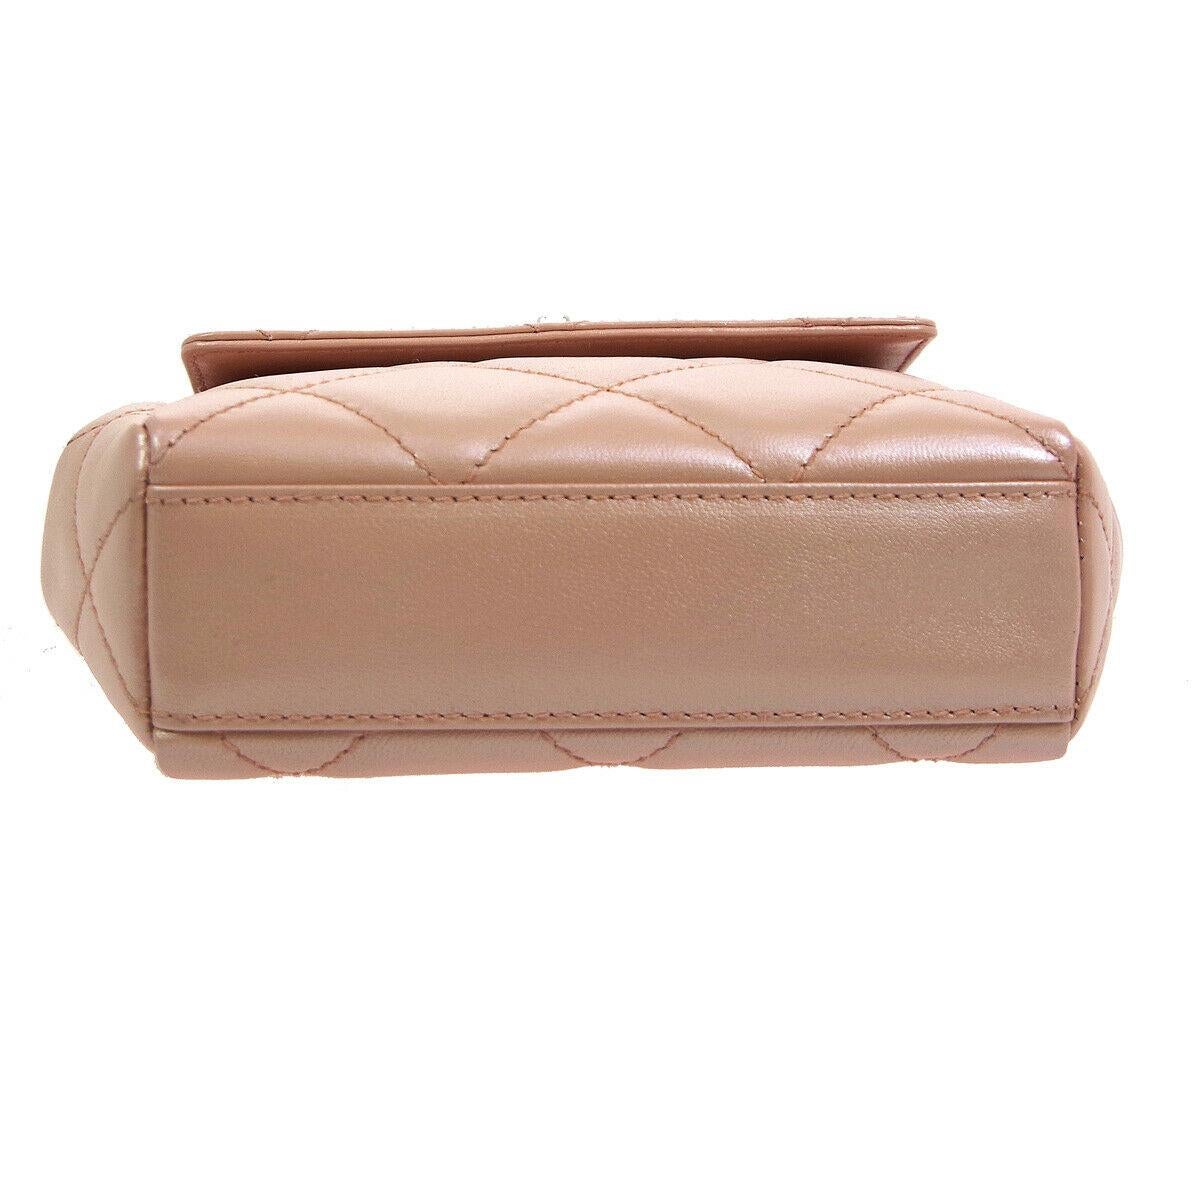 Brown Chanel Runway Iridescent Leather Silver Top Handle Satchel Evening Wristlet Bag